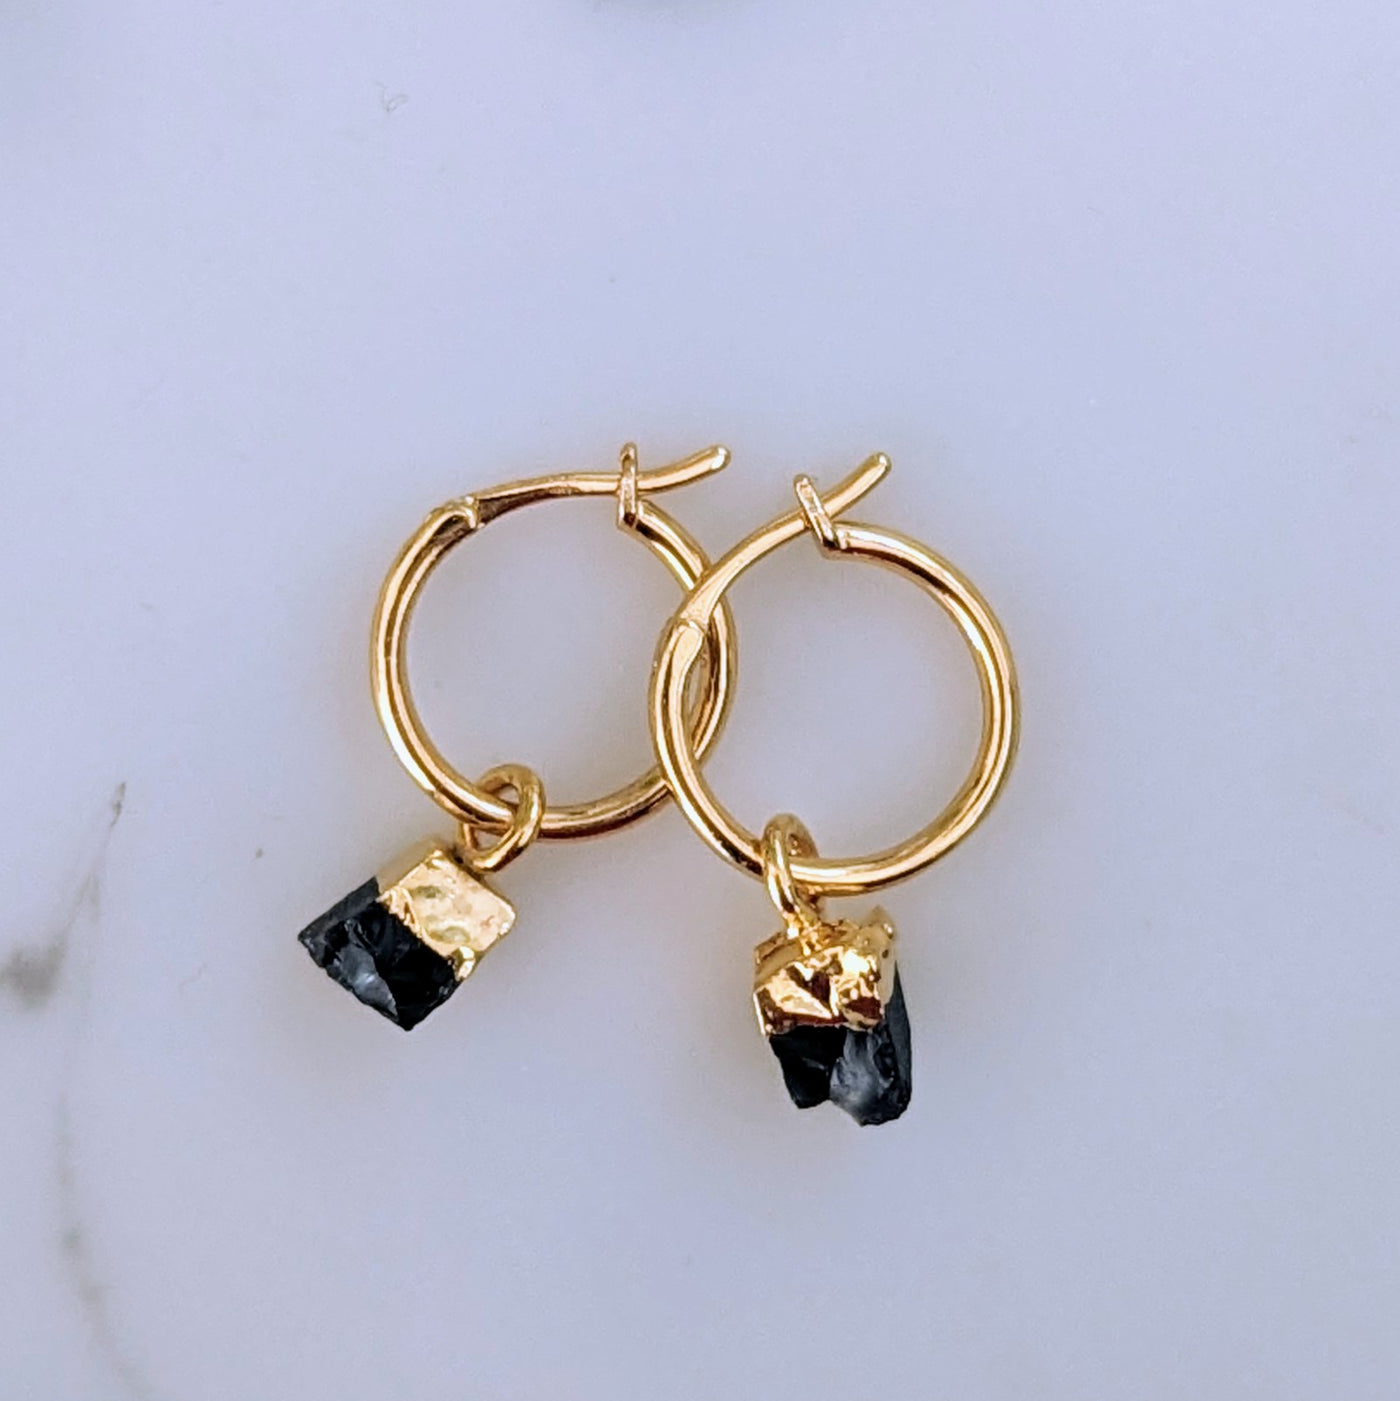 gold plated garnet January birthstone earrings 